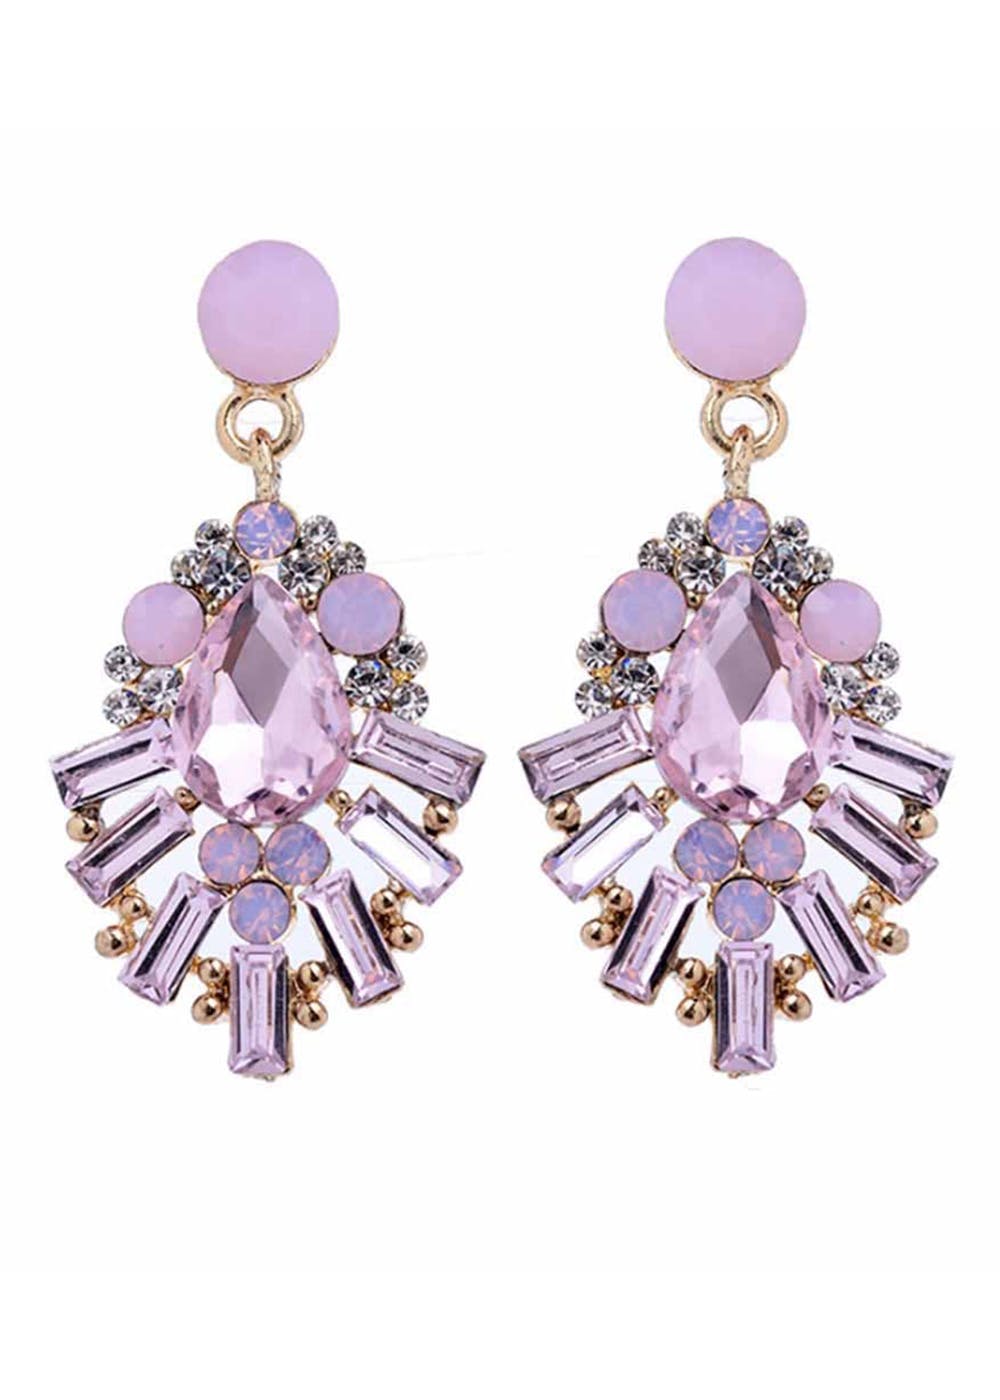 Get Crisiant Pink Rhinestone Earrings at ₹ 499 | LBB Shop